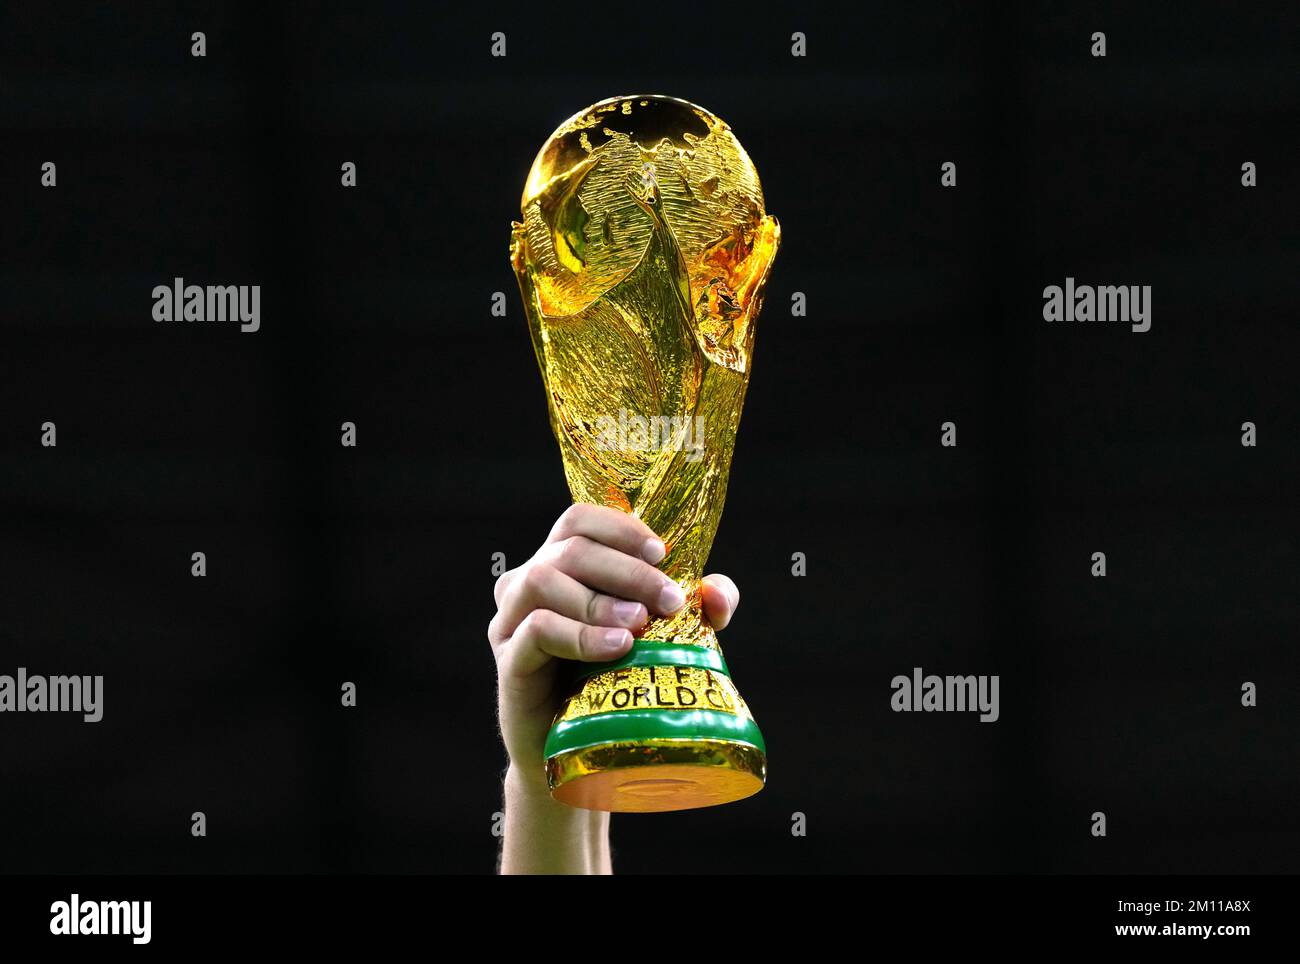 Official 2018 FIFA World Cup Mini Replica Trophy